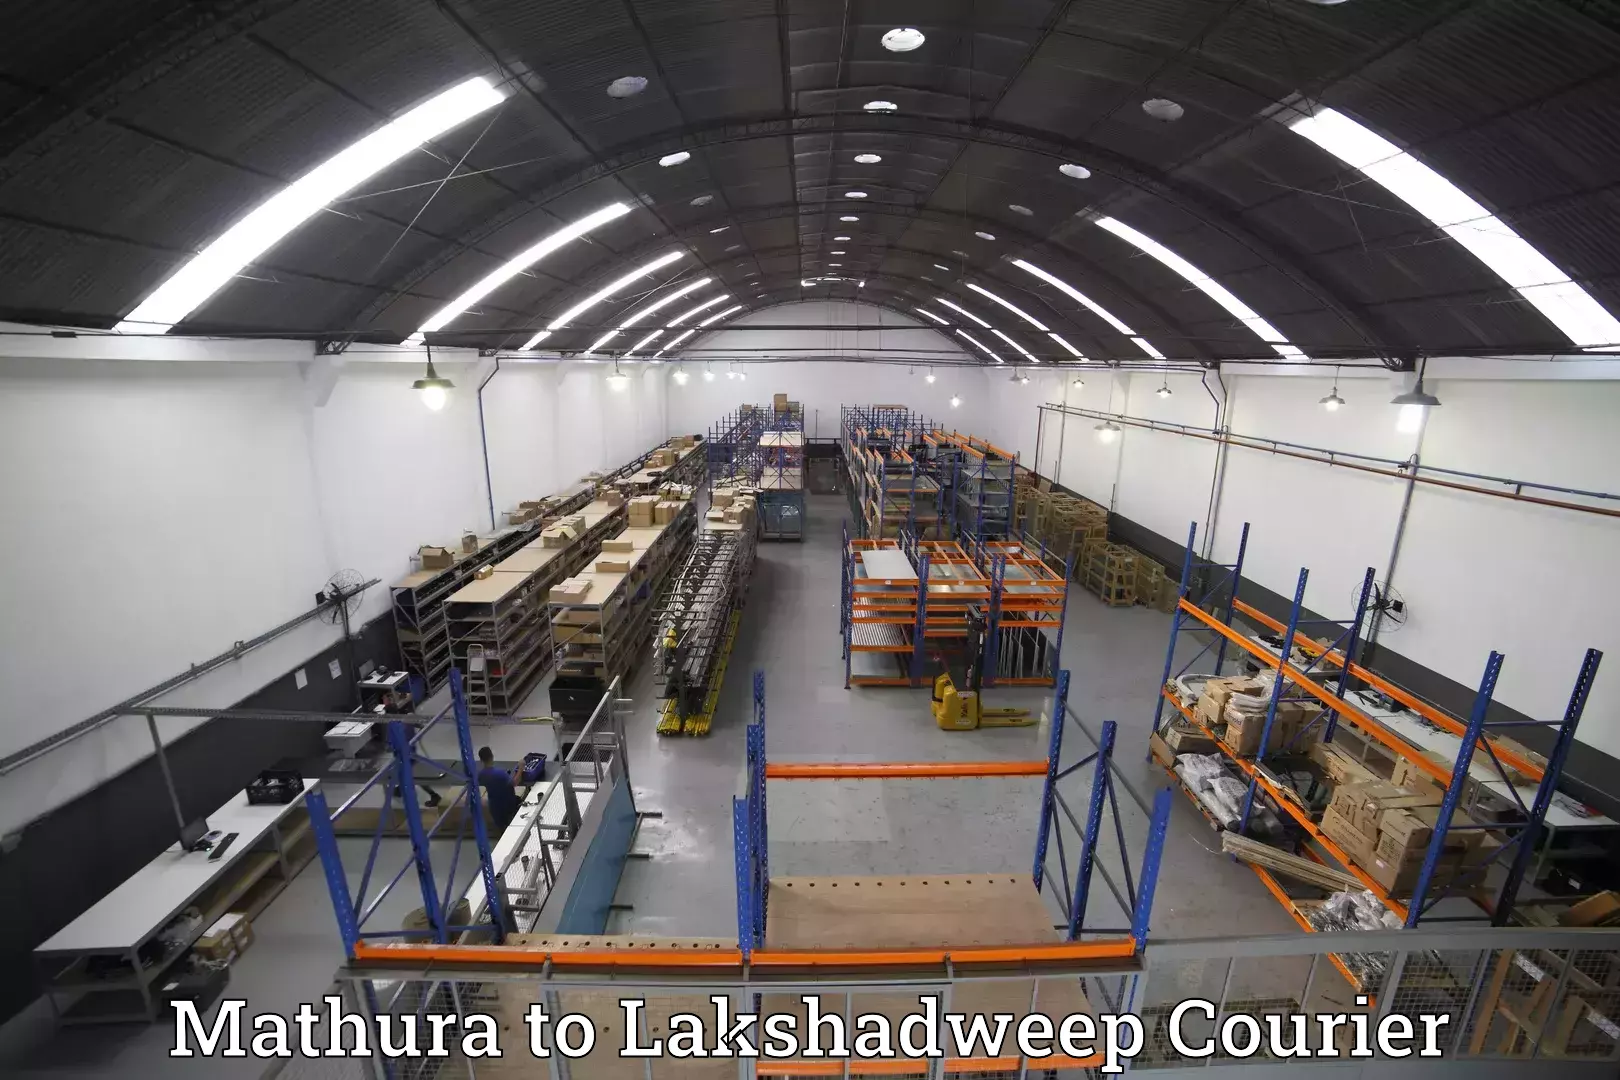 Luggage shipment specialists Mathura to Lakshadweep